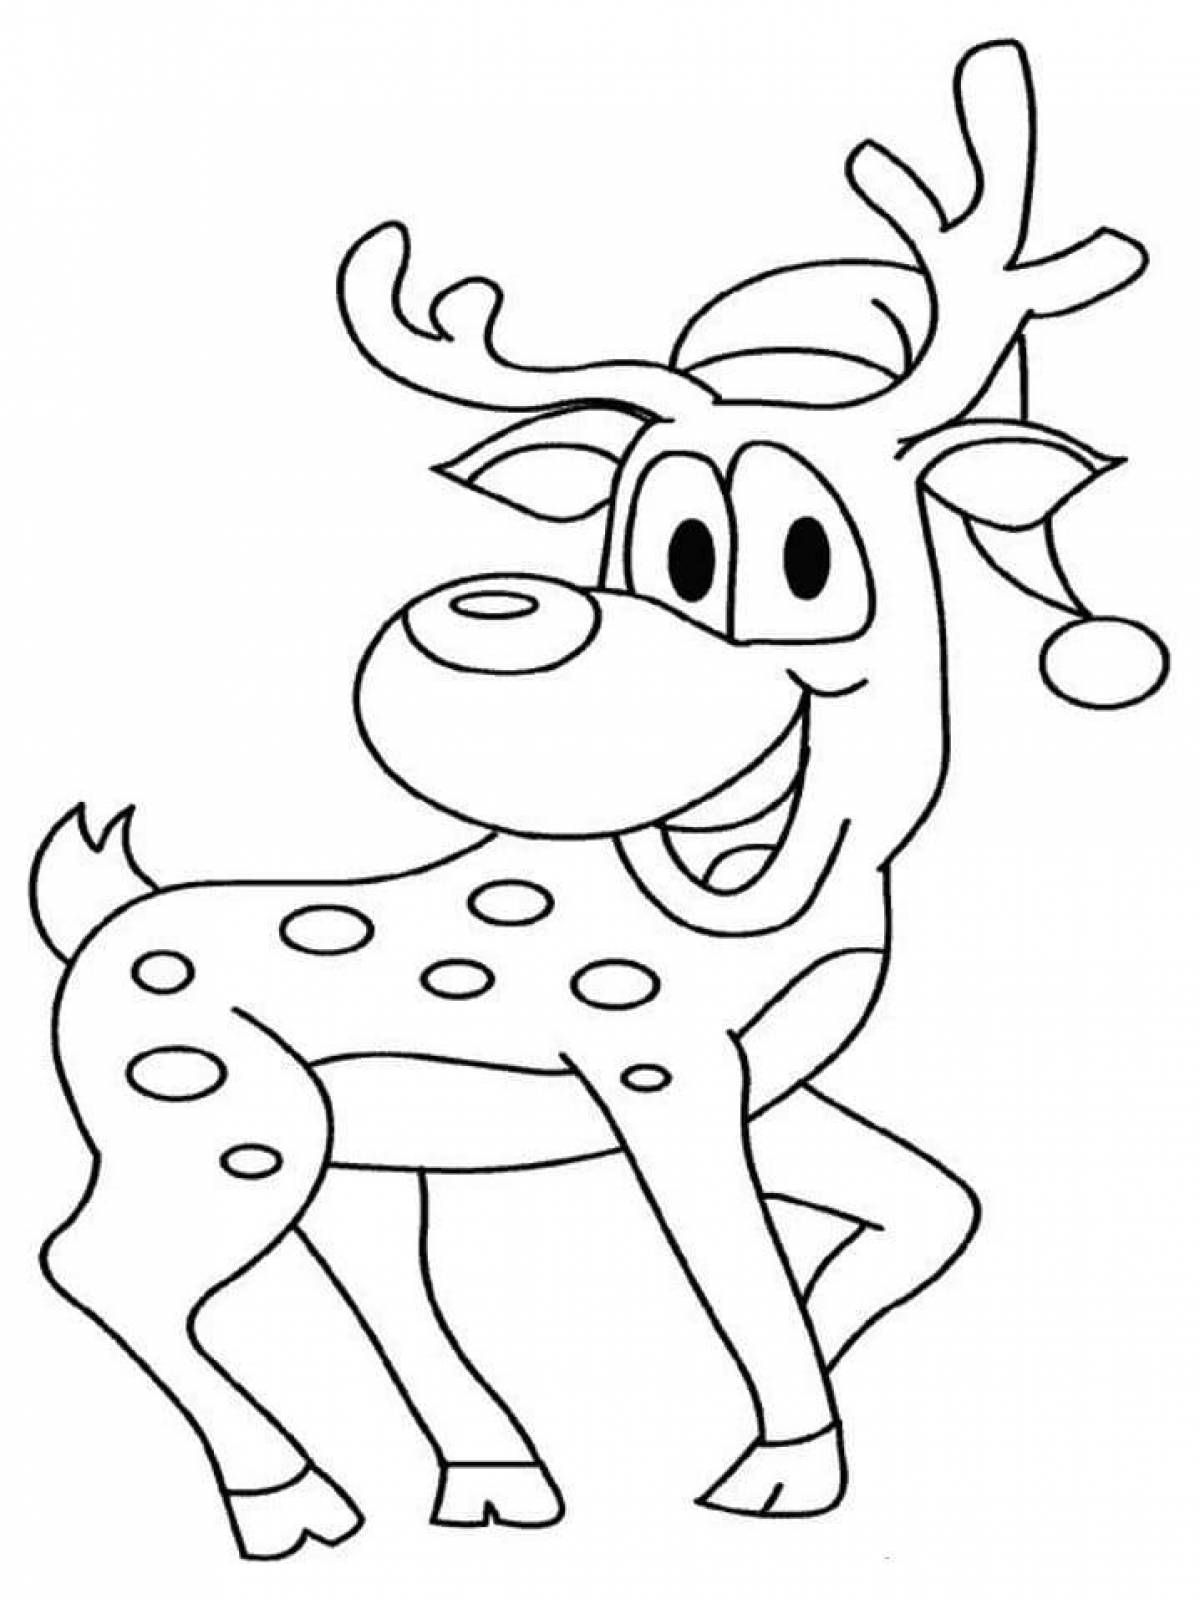 Funny deer coloring for kids